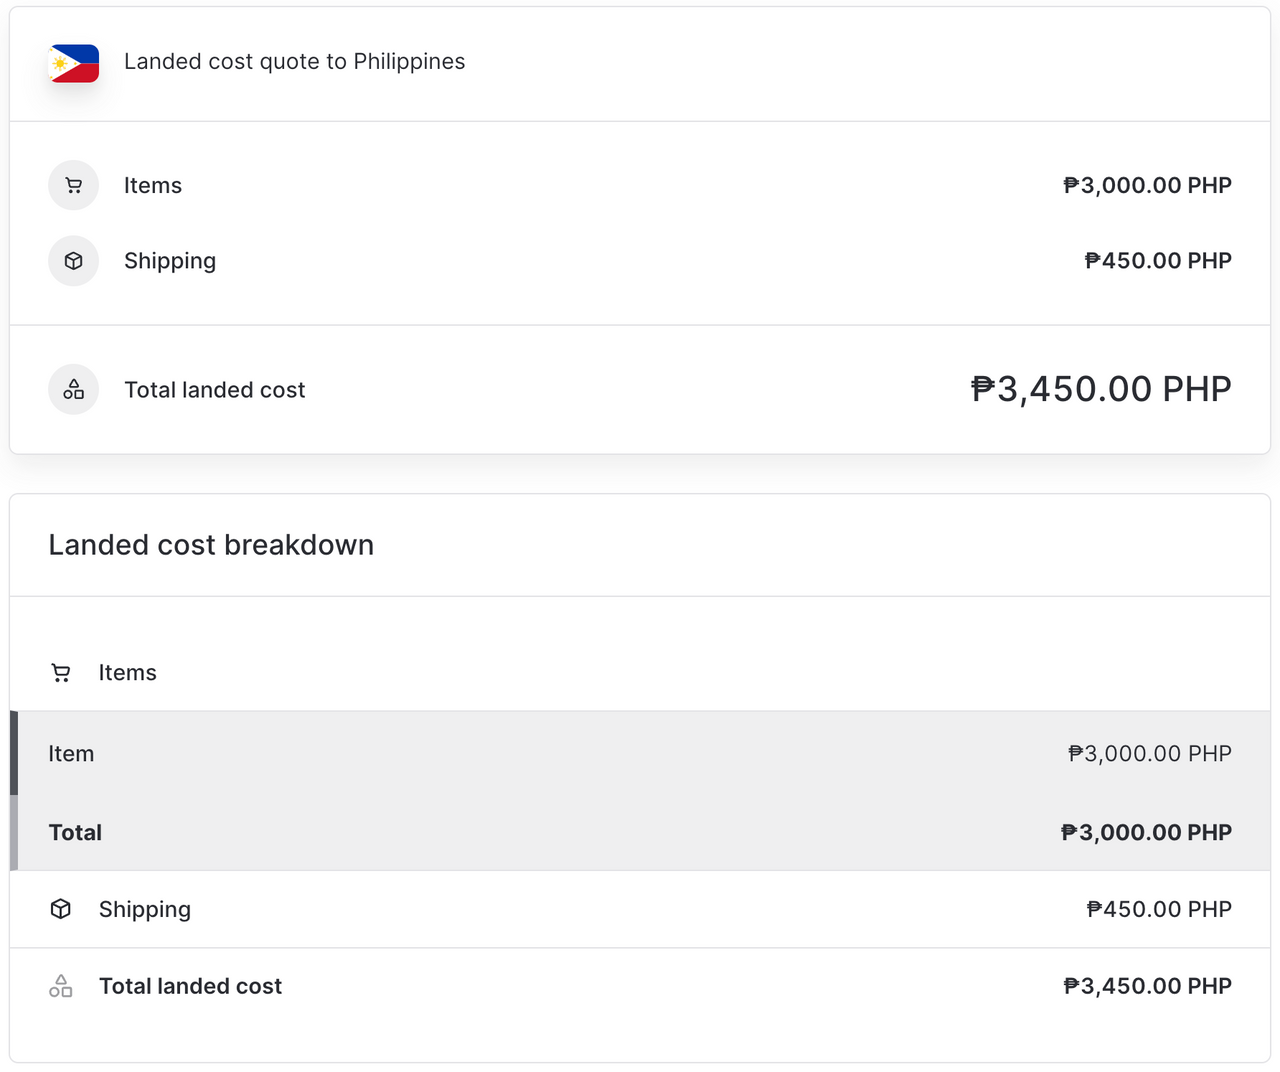 Philippines landed cost quote below the de
minimis